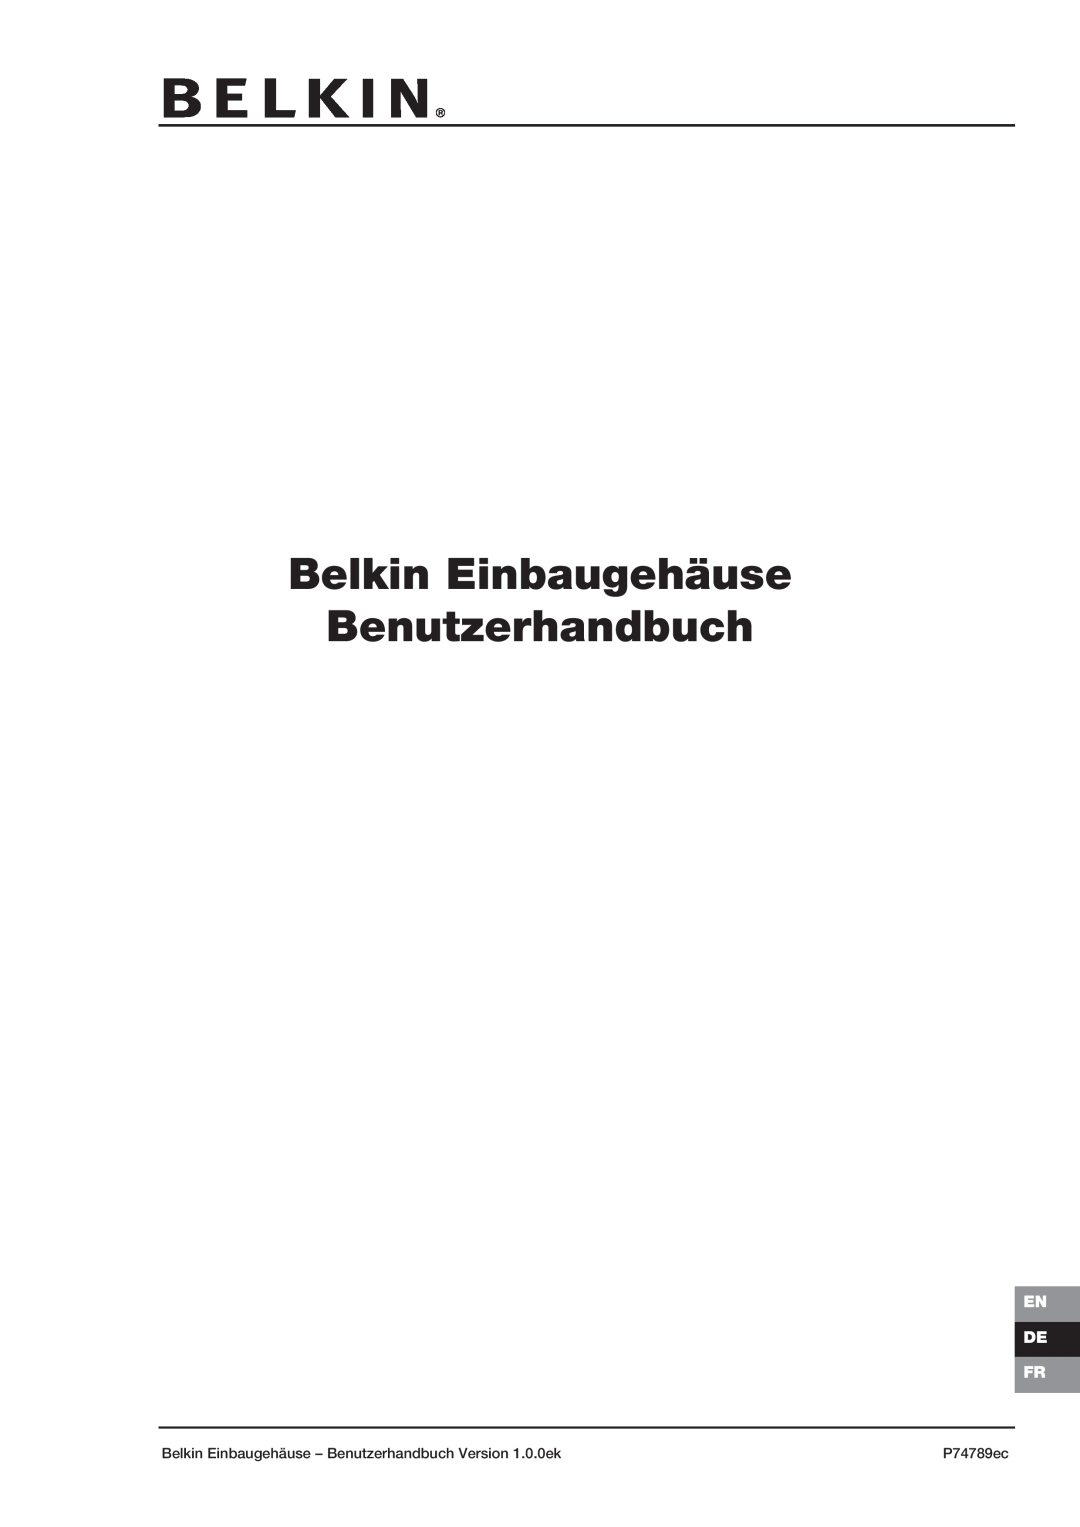 Belkin 42U Belkin Einbaugehäuse Benutzerhandbuch, En De Fr, Belkin Einbaugehäuse - Benutzerhandbuch Version 1.0.0ek 